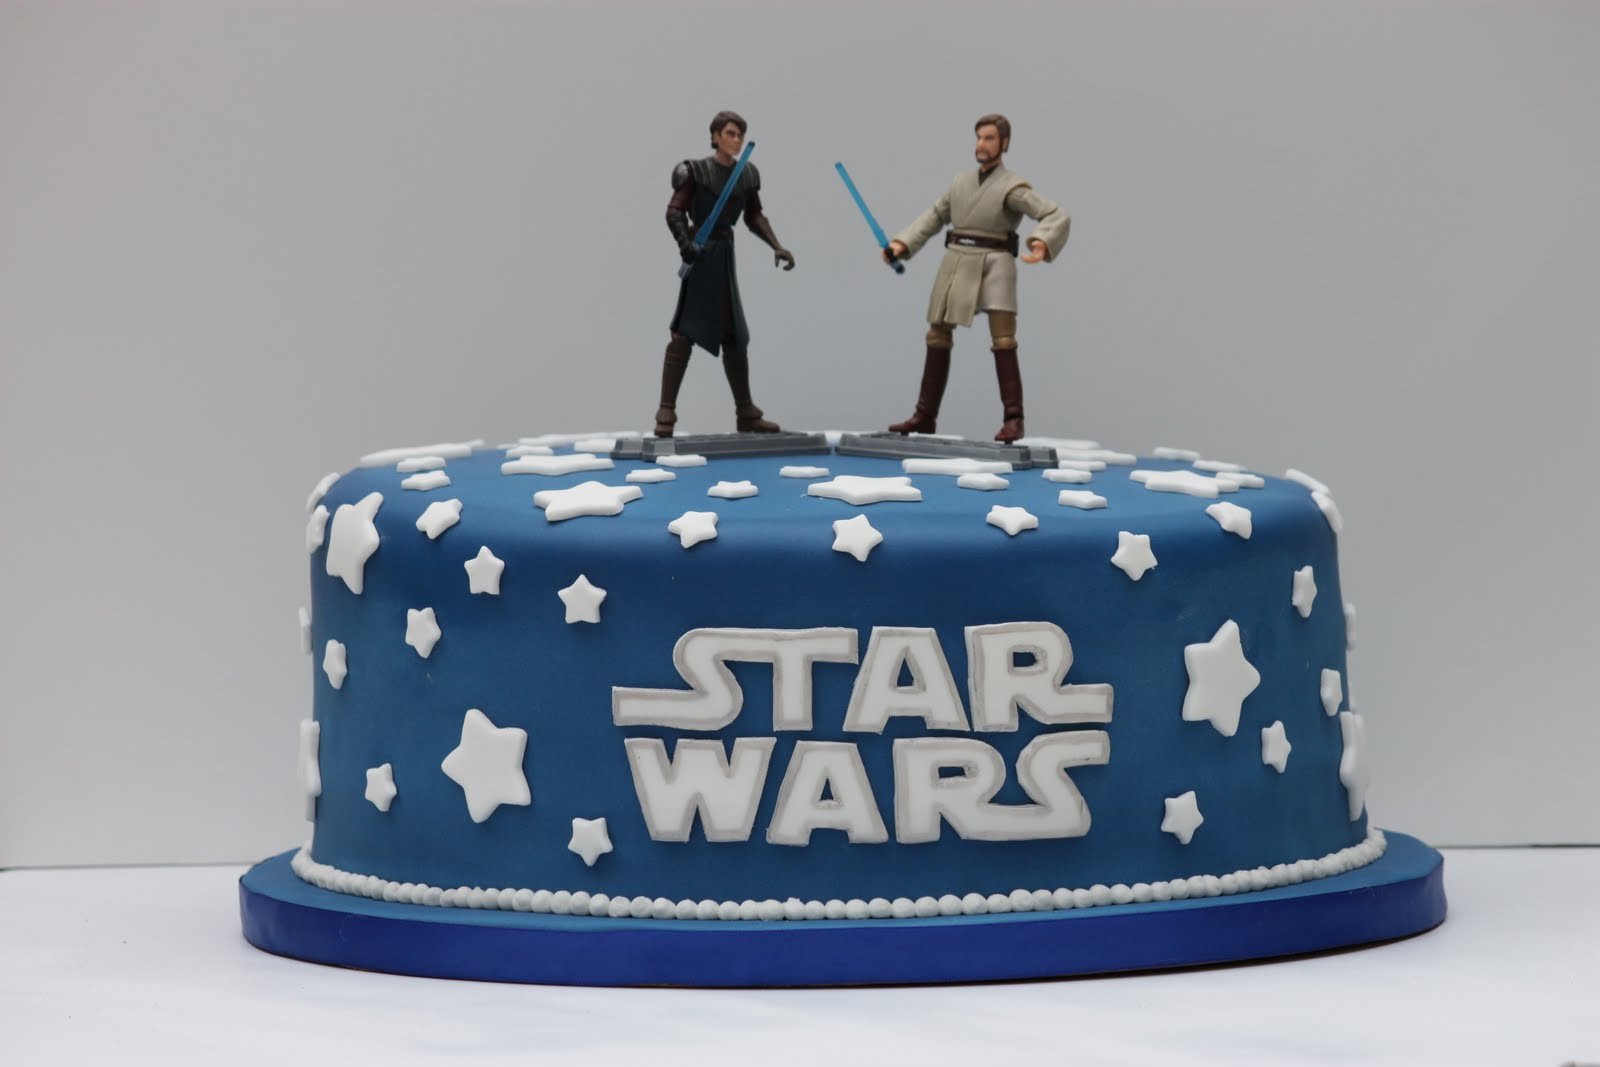 Star Wars Birthday Cake Decorations
 Whimsical by Design Ryan s Star Wars Birthday Cake